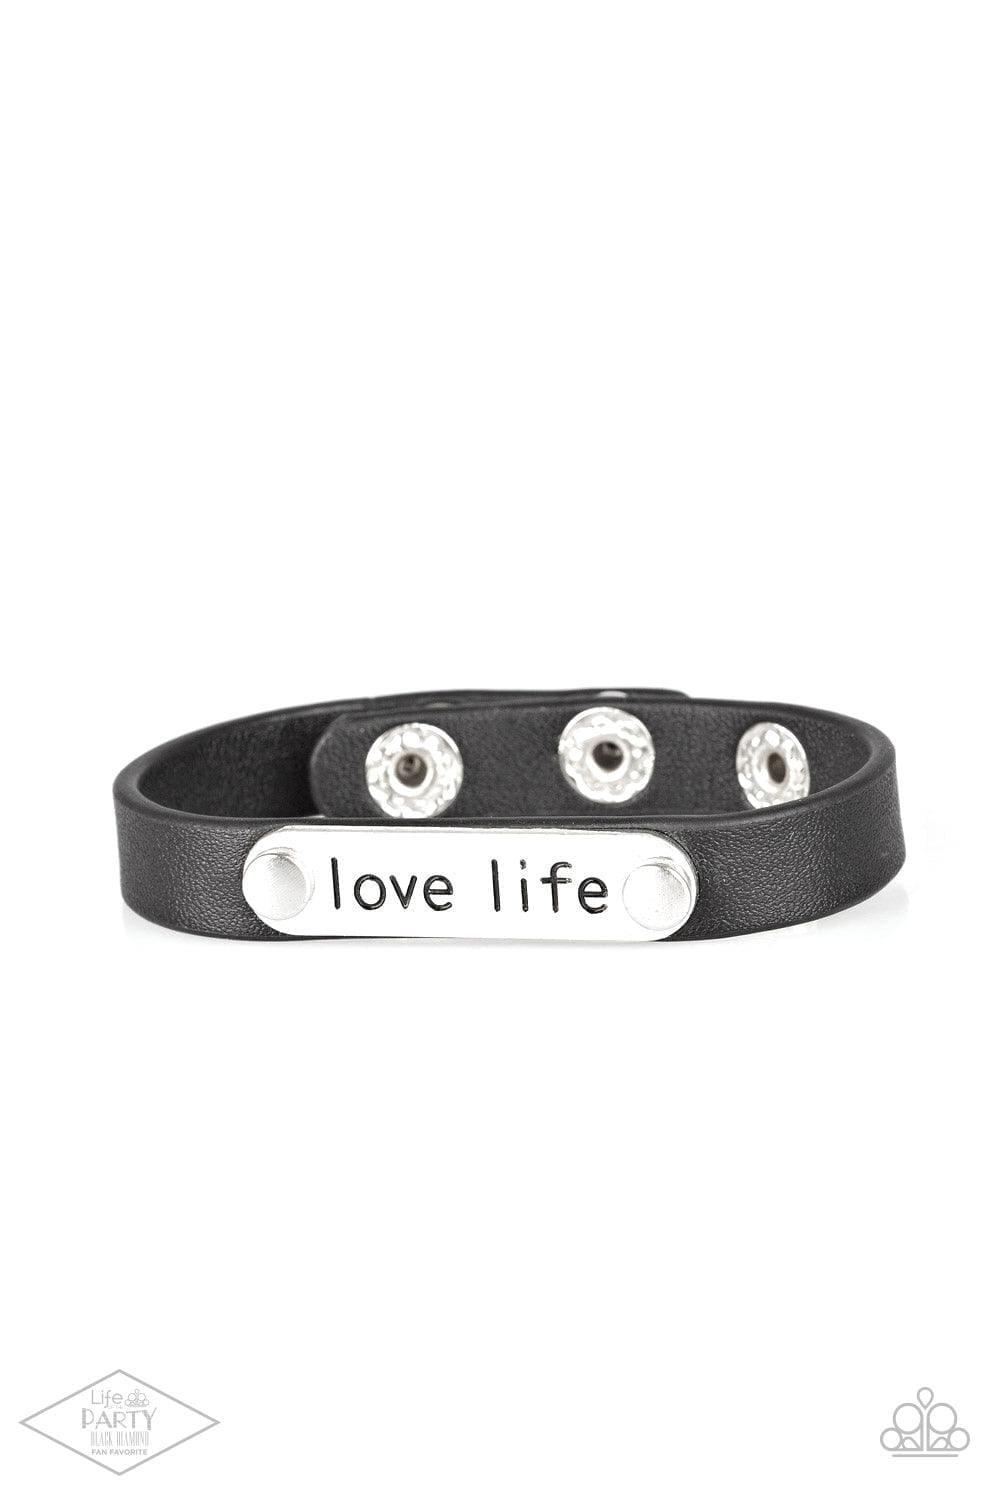 Paparazzi Accessories - Love Life - Black Snap Bracelet - Bling by JessieK